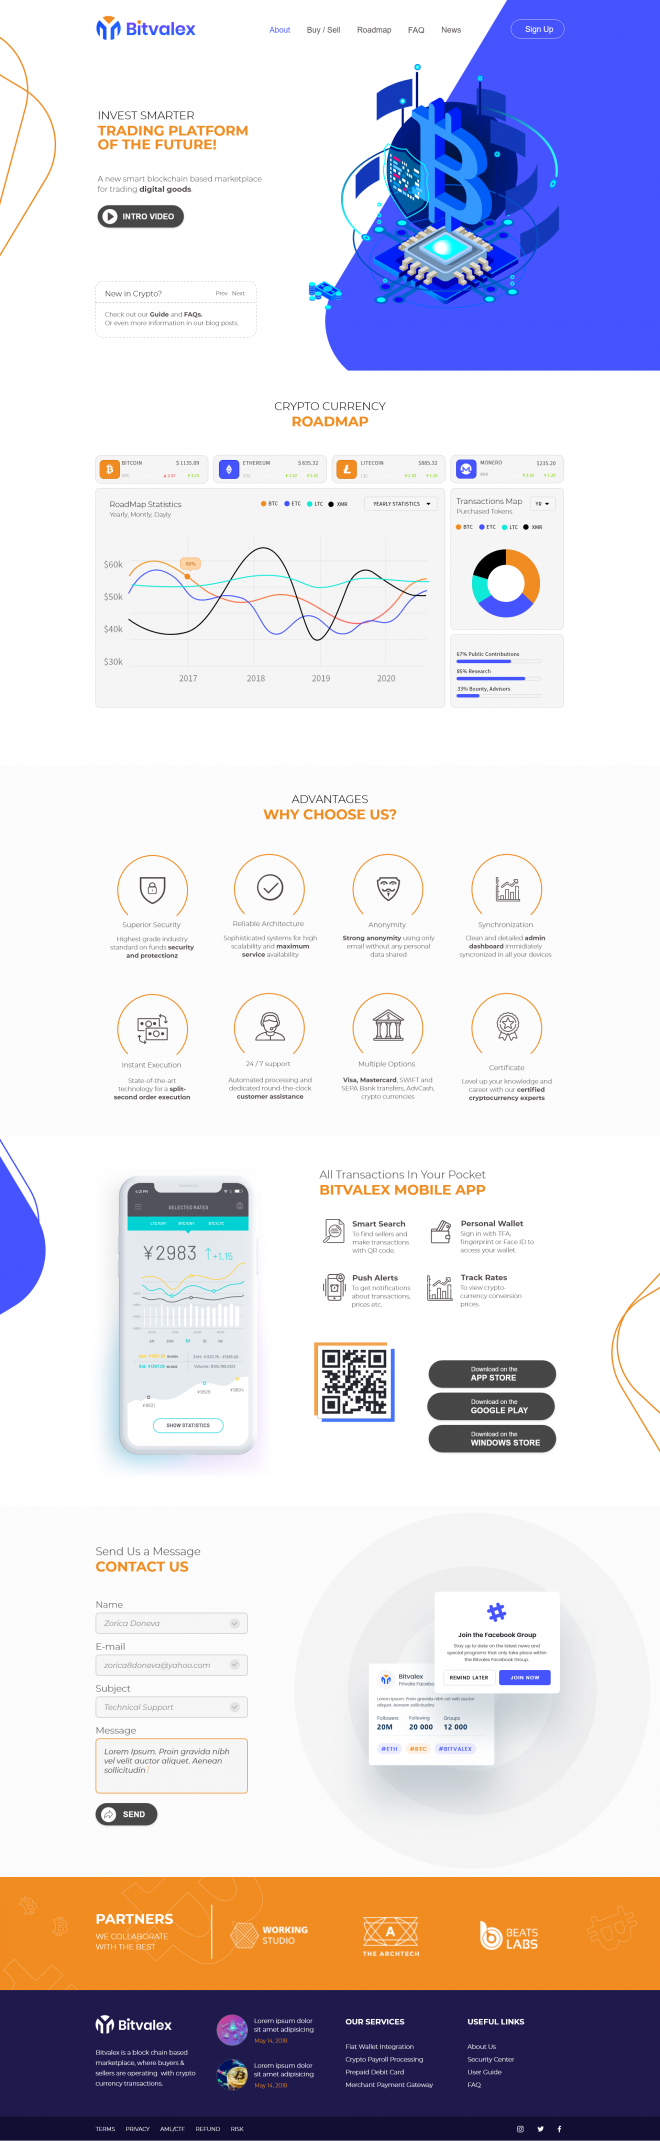 Bitvalex-Homepage-Design